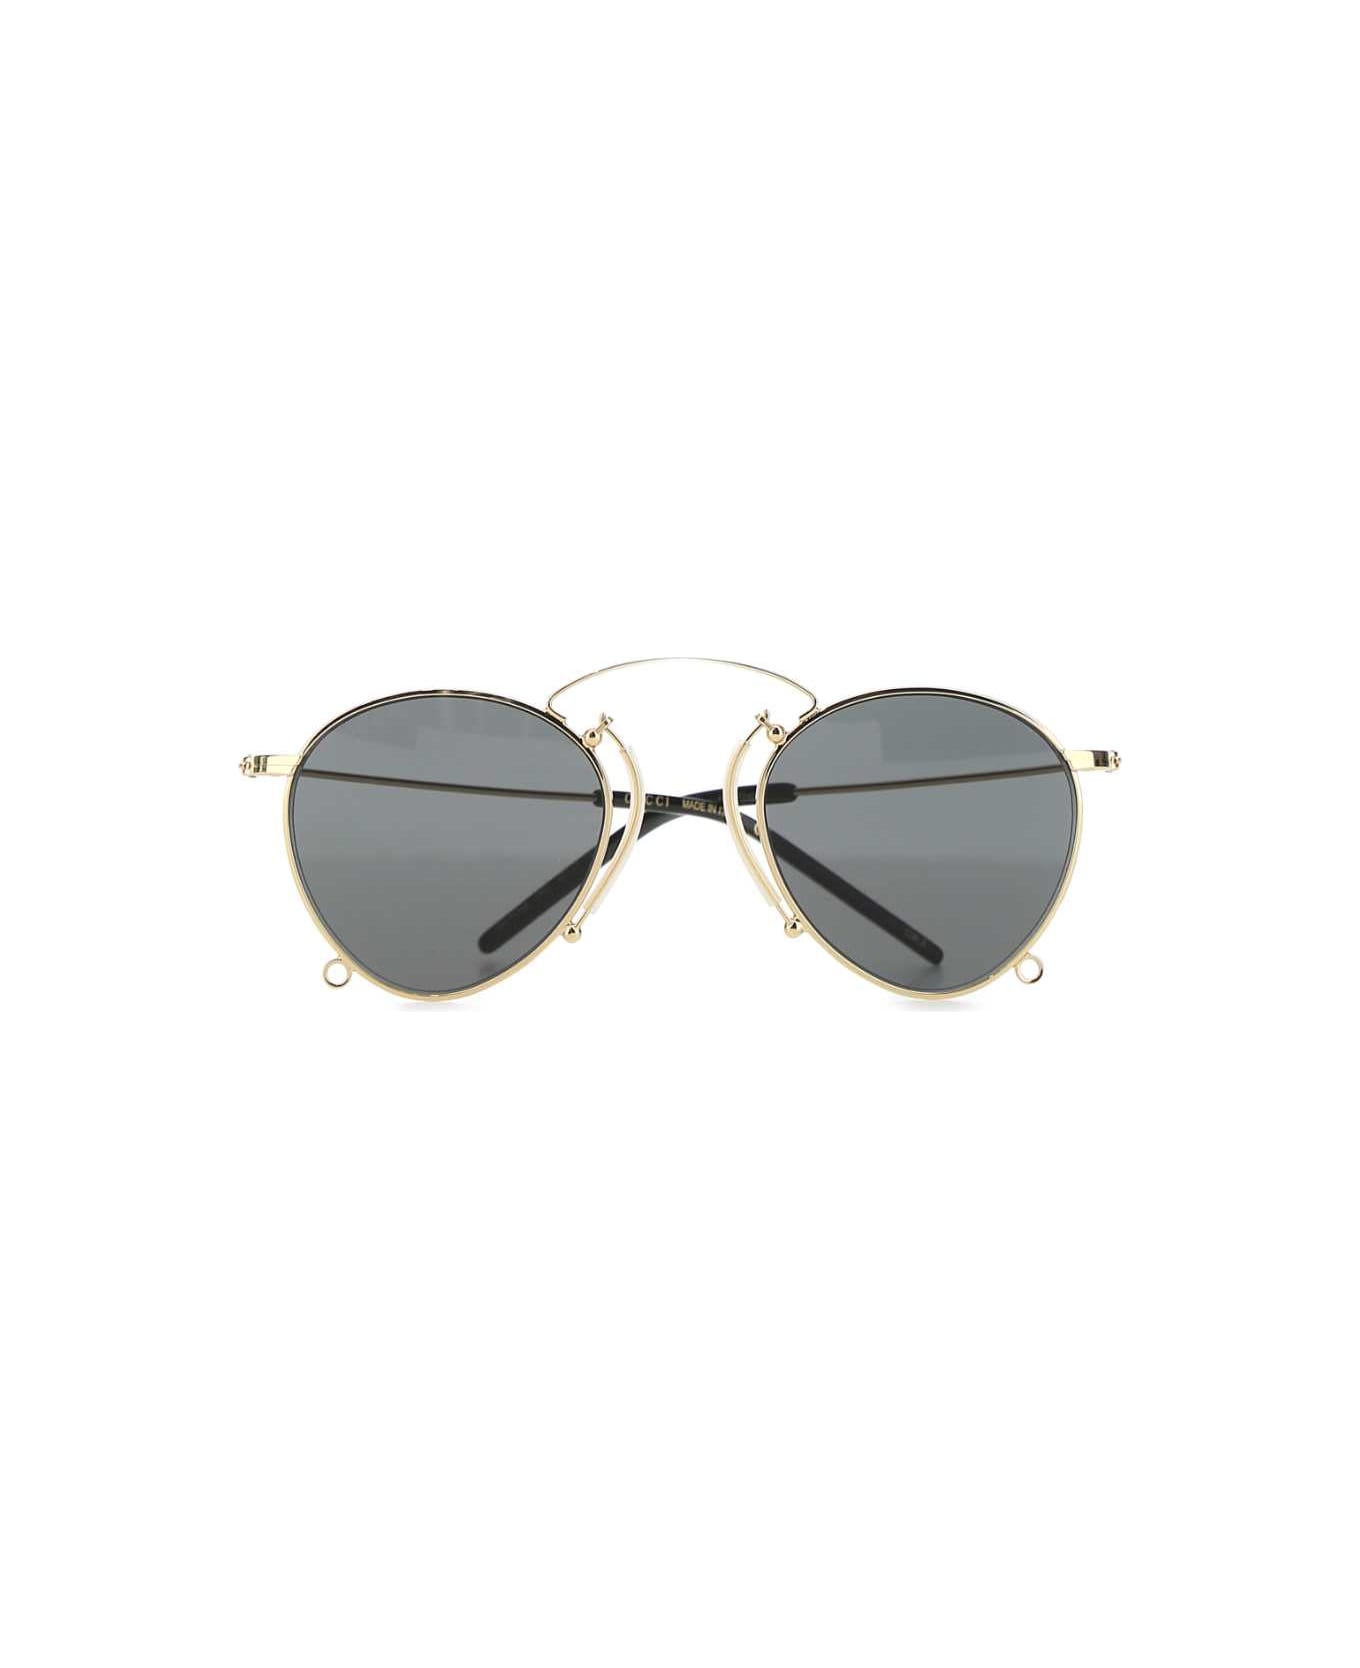 Gucci Metal Sunglasses - 8012